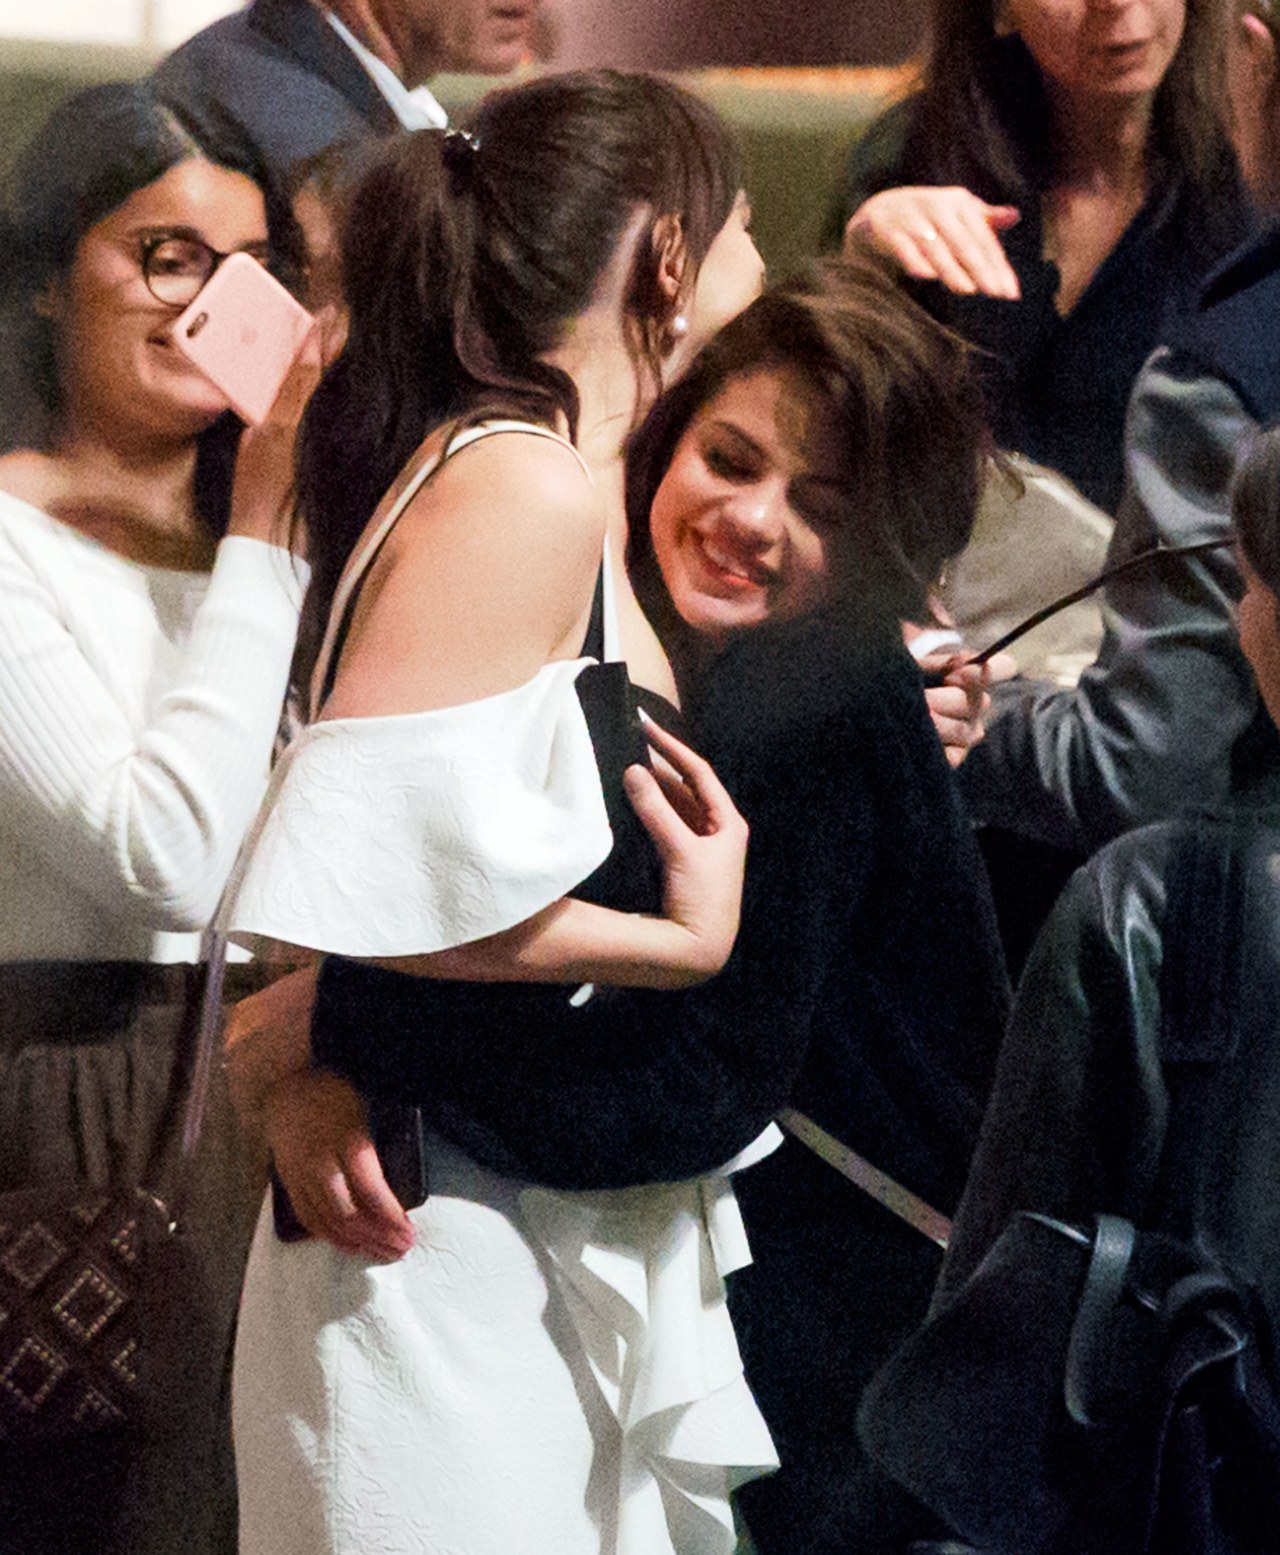 EXCLUSIVE: Selena Gomez surprises Dakota Johnson on Dakota's 27th birthday by giving her a hug at and NY Film Festival event